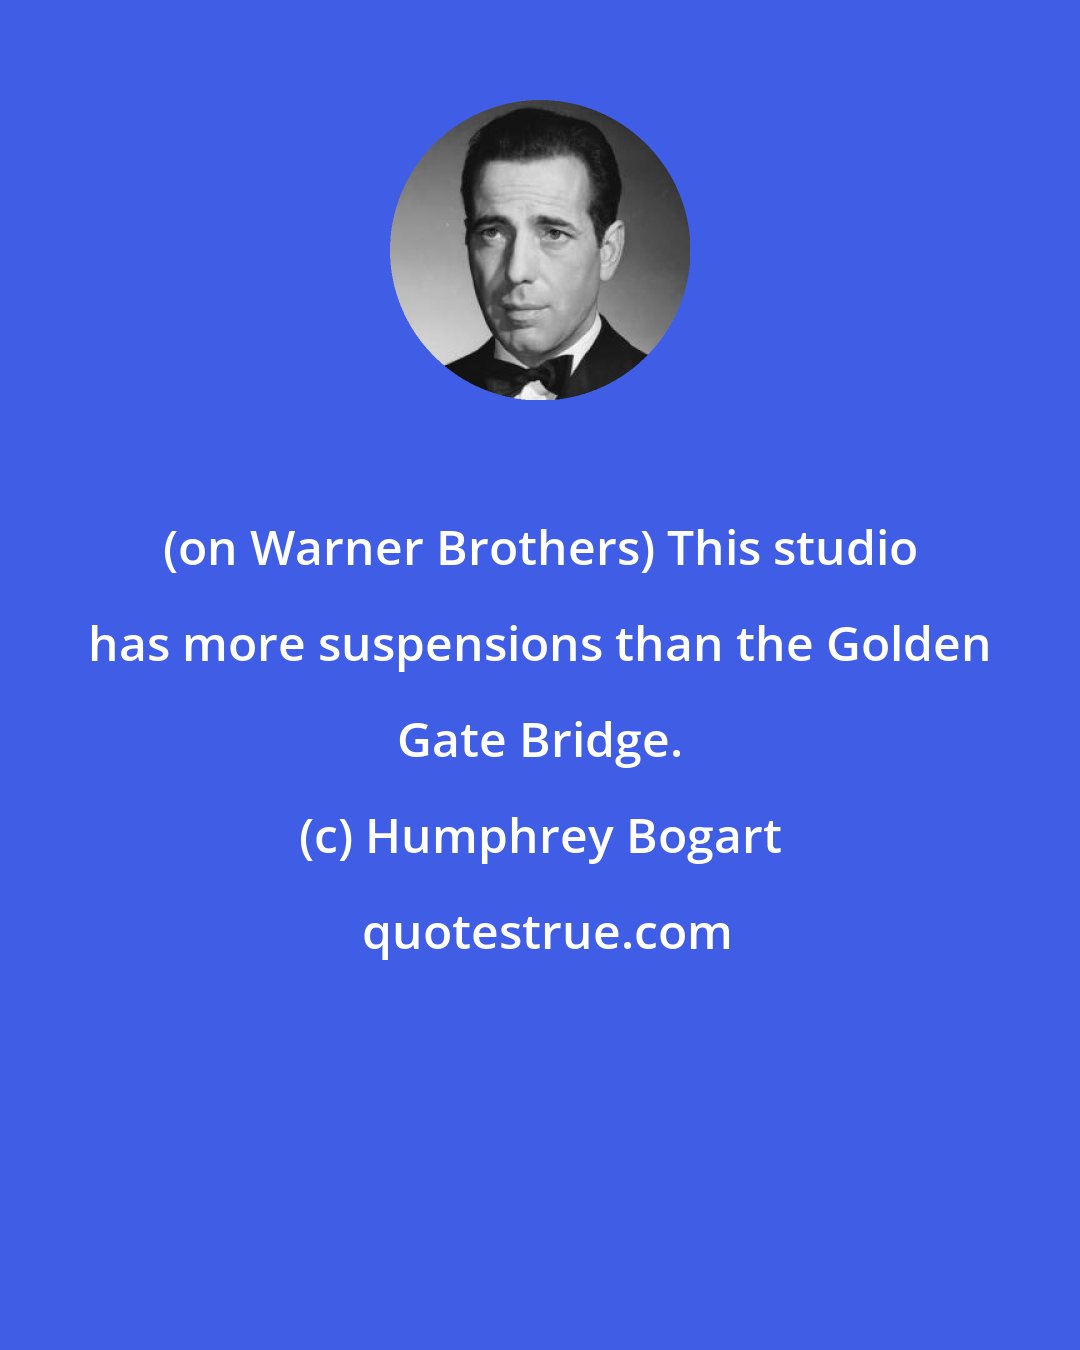 Humphrey Bogart: (on Warner Brothers) This studio has more suspensions than the Golden Gate Bridge.